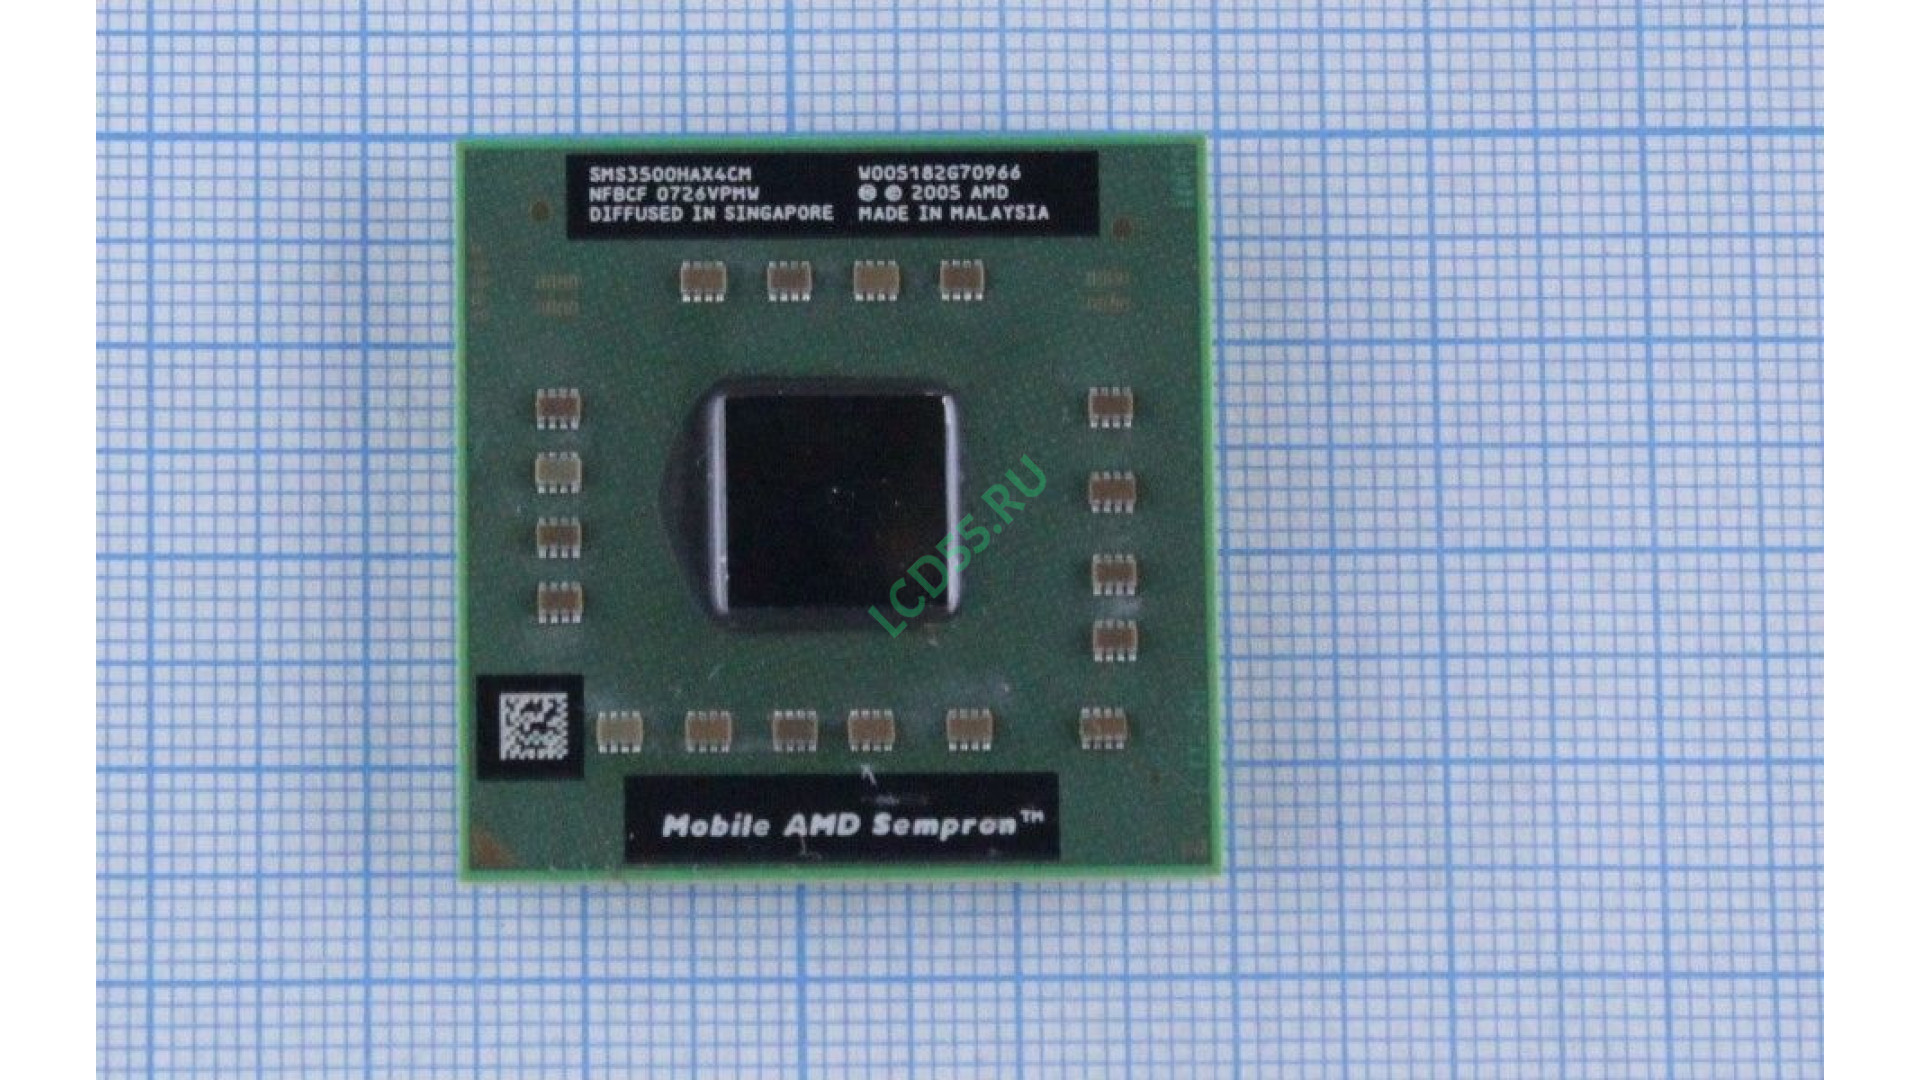 Процессор SMS3500HAX4CM